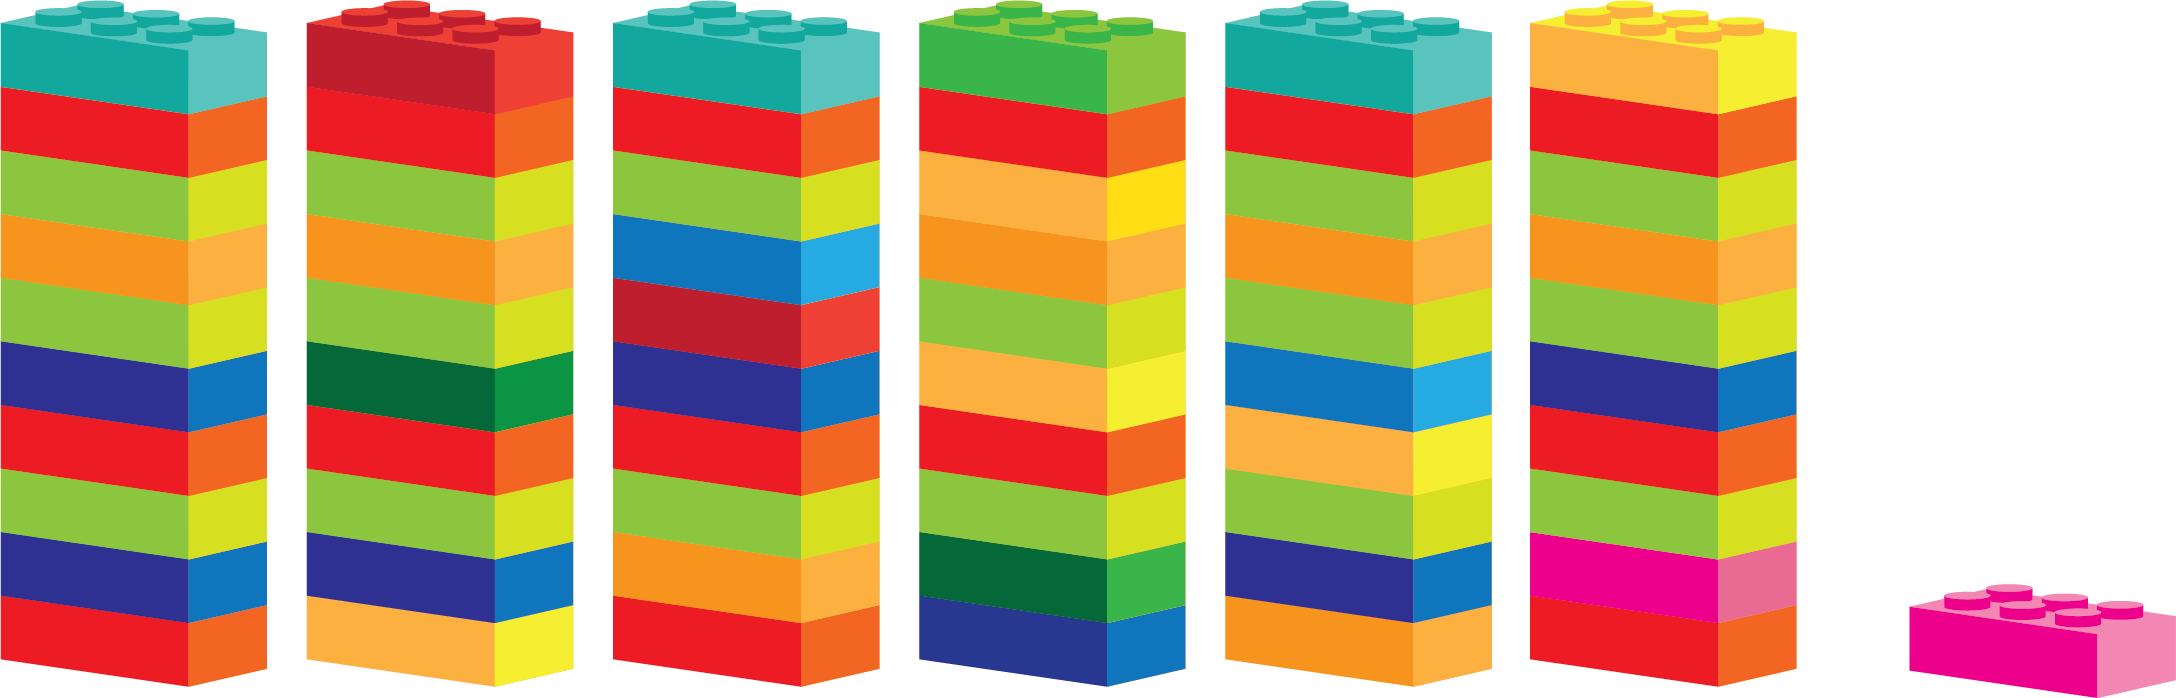 Six stacks of ten legos next to a single block of lego